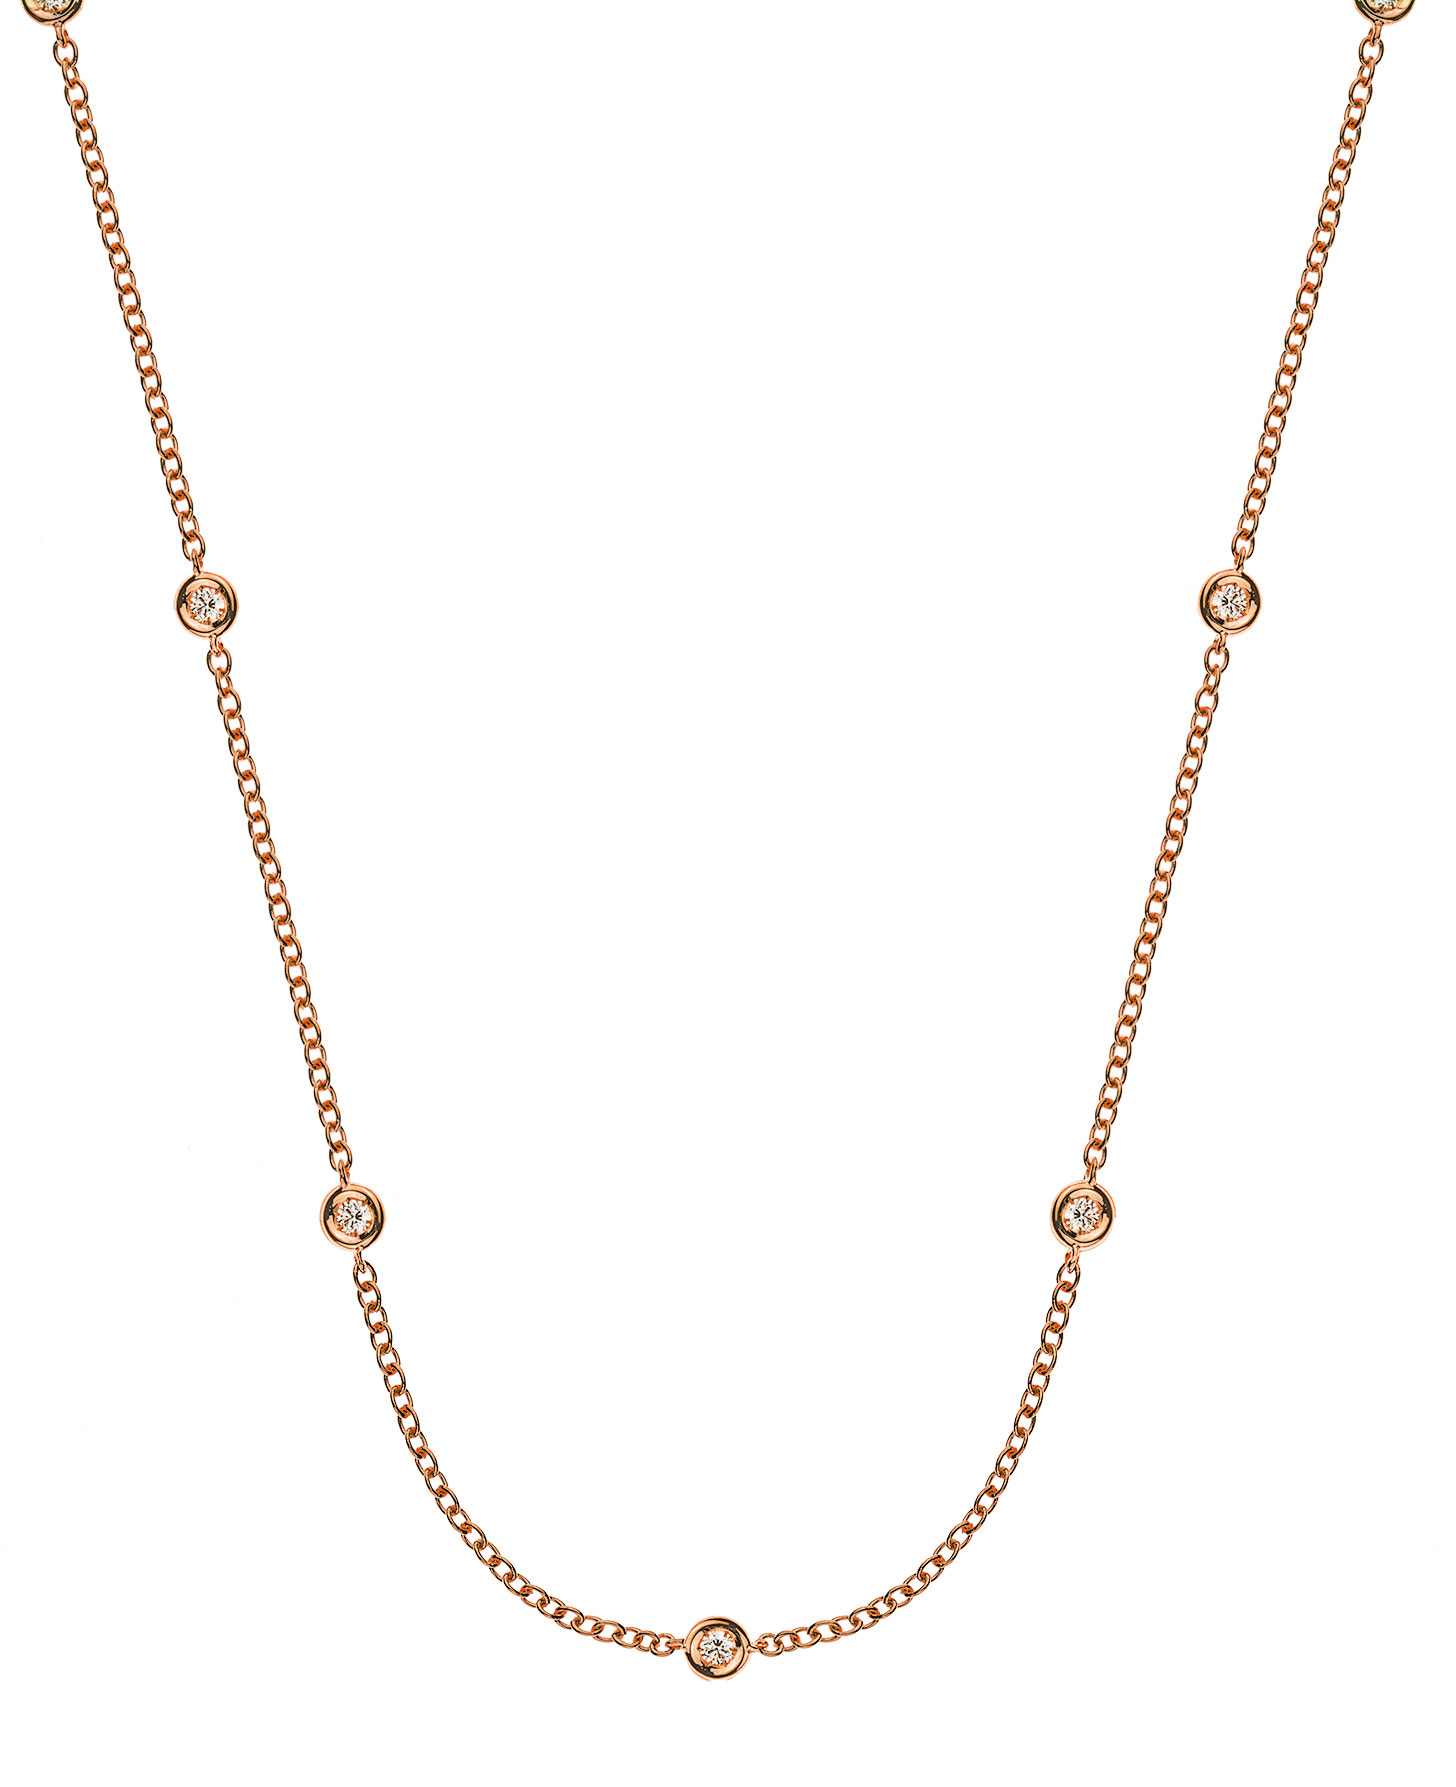 AURONOS Prestige Necklace rose gold 18K diamonds 0.30ct